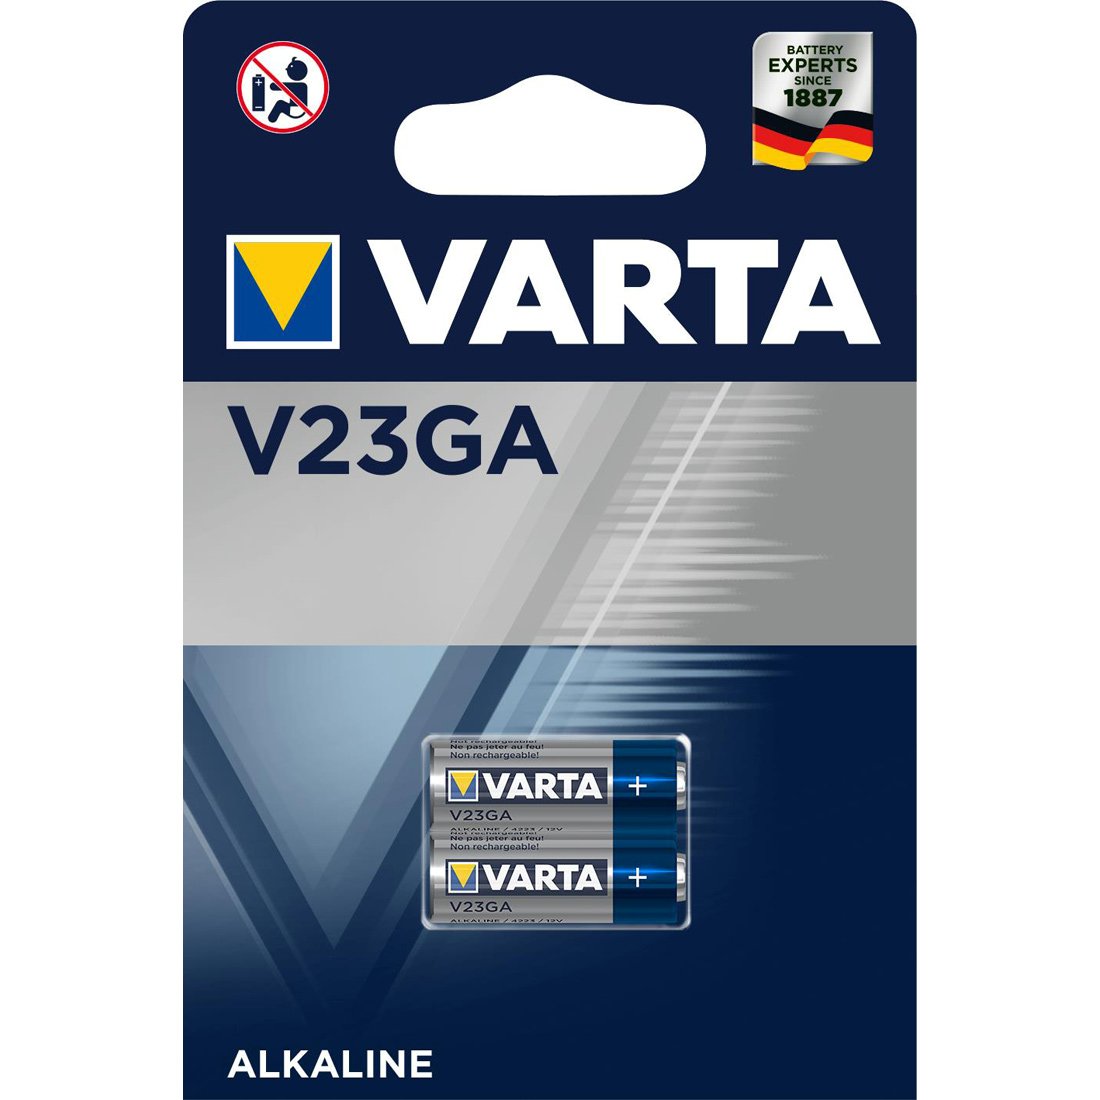 VARTA BATTERI ALKALINE 12V V23GA 2-PACK